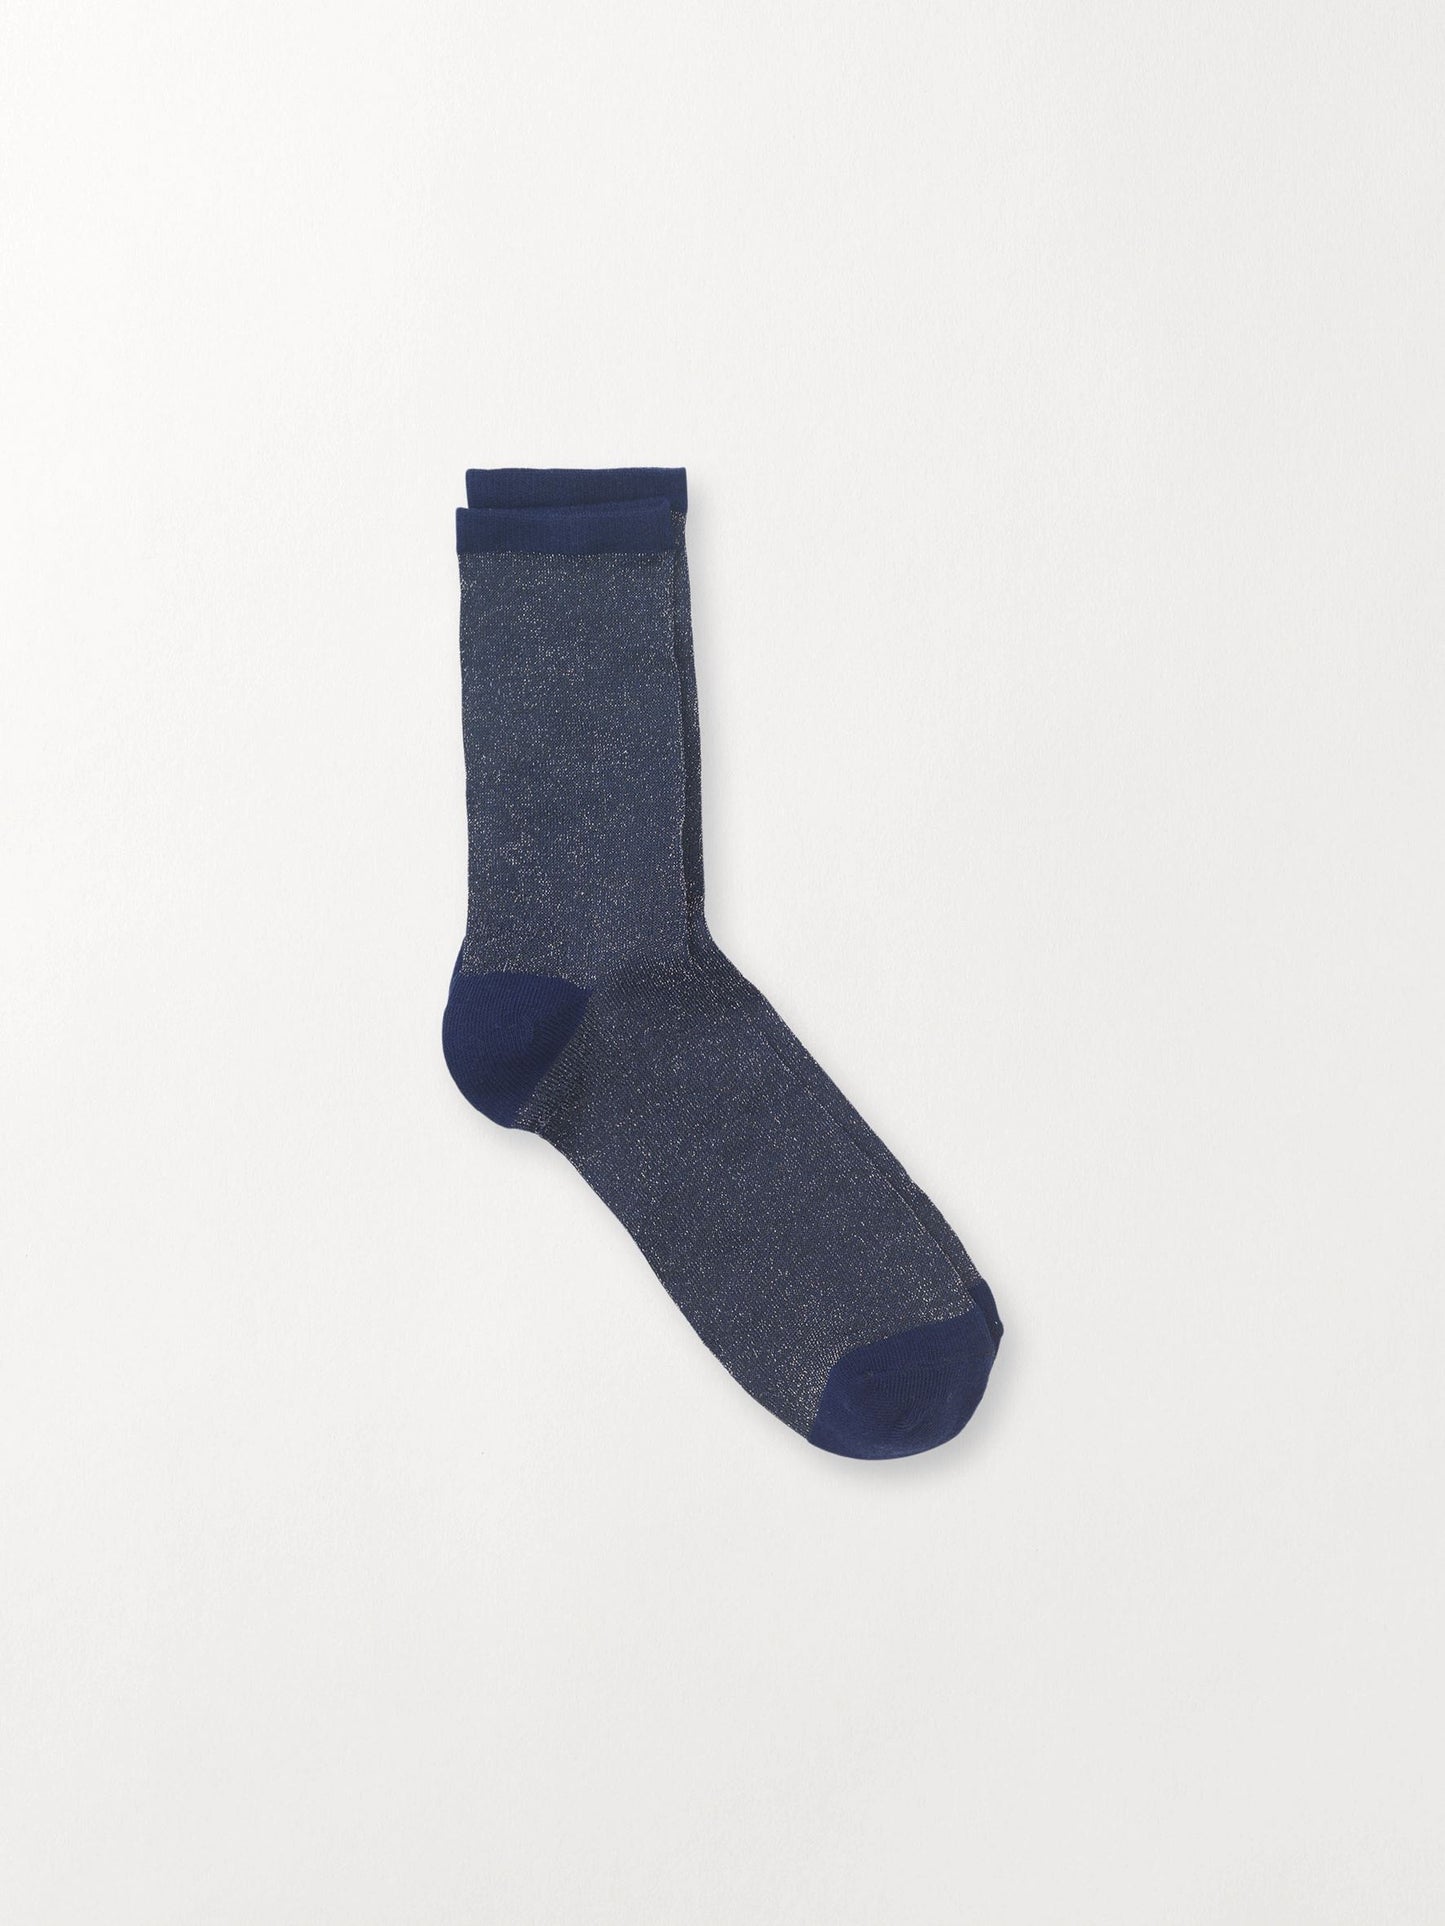 Becksöndergaard, Dina Solid - Medieval Blue, socks, socks